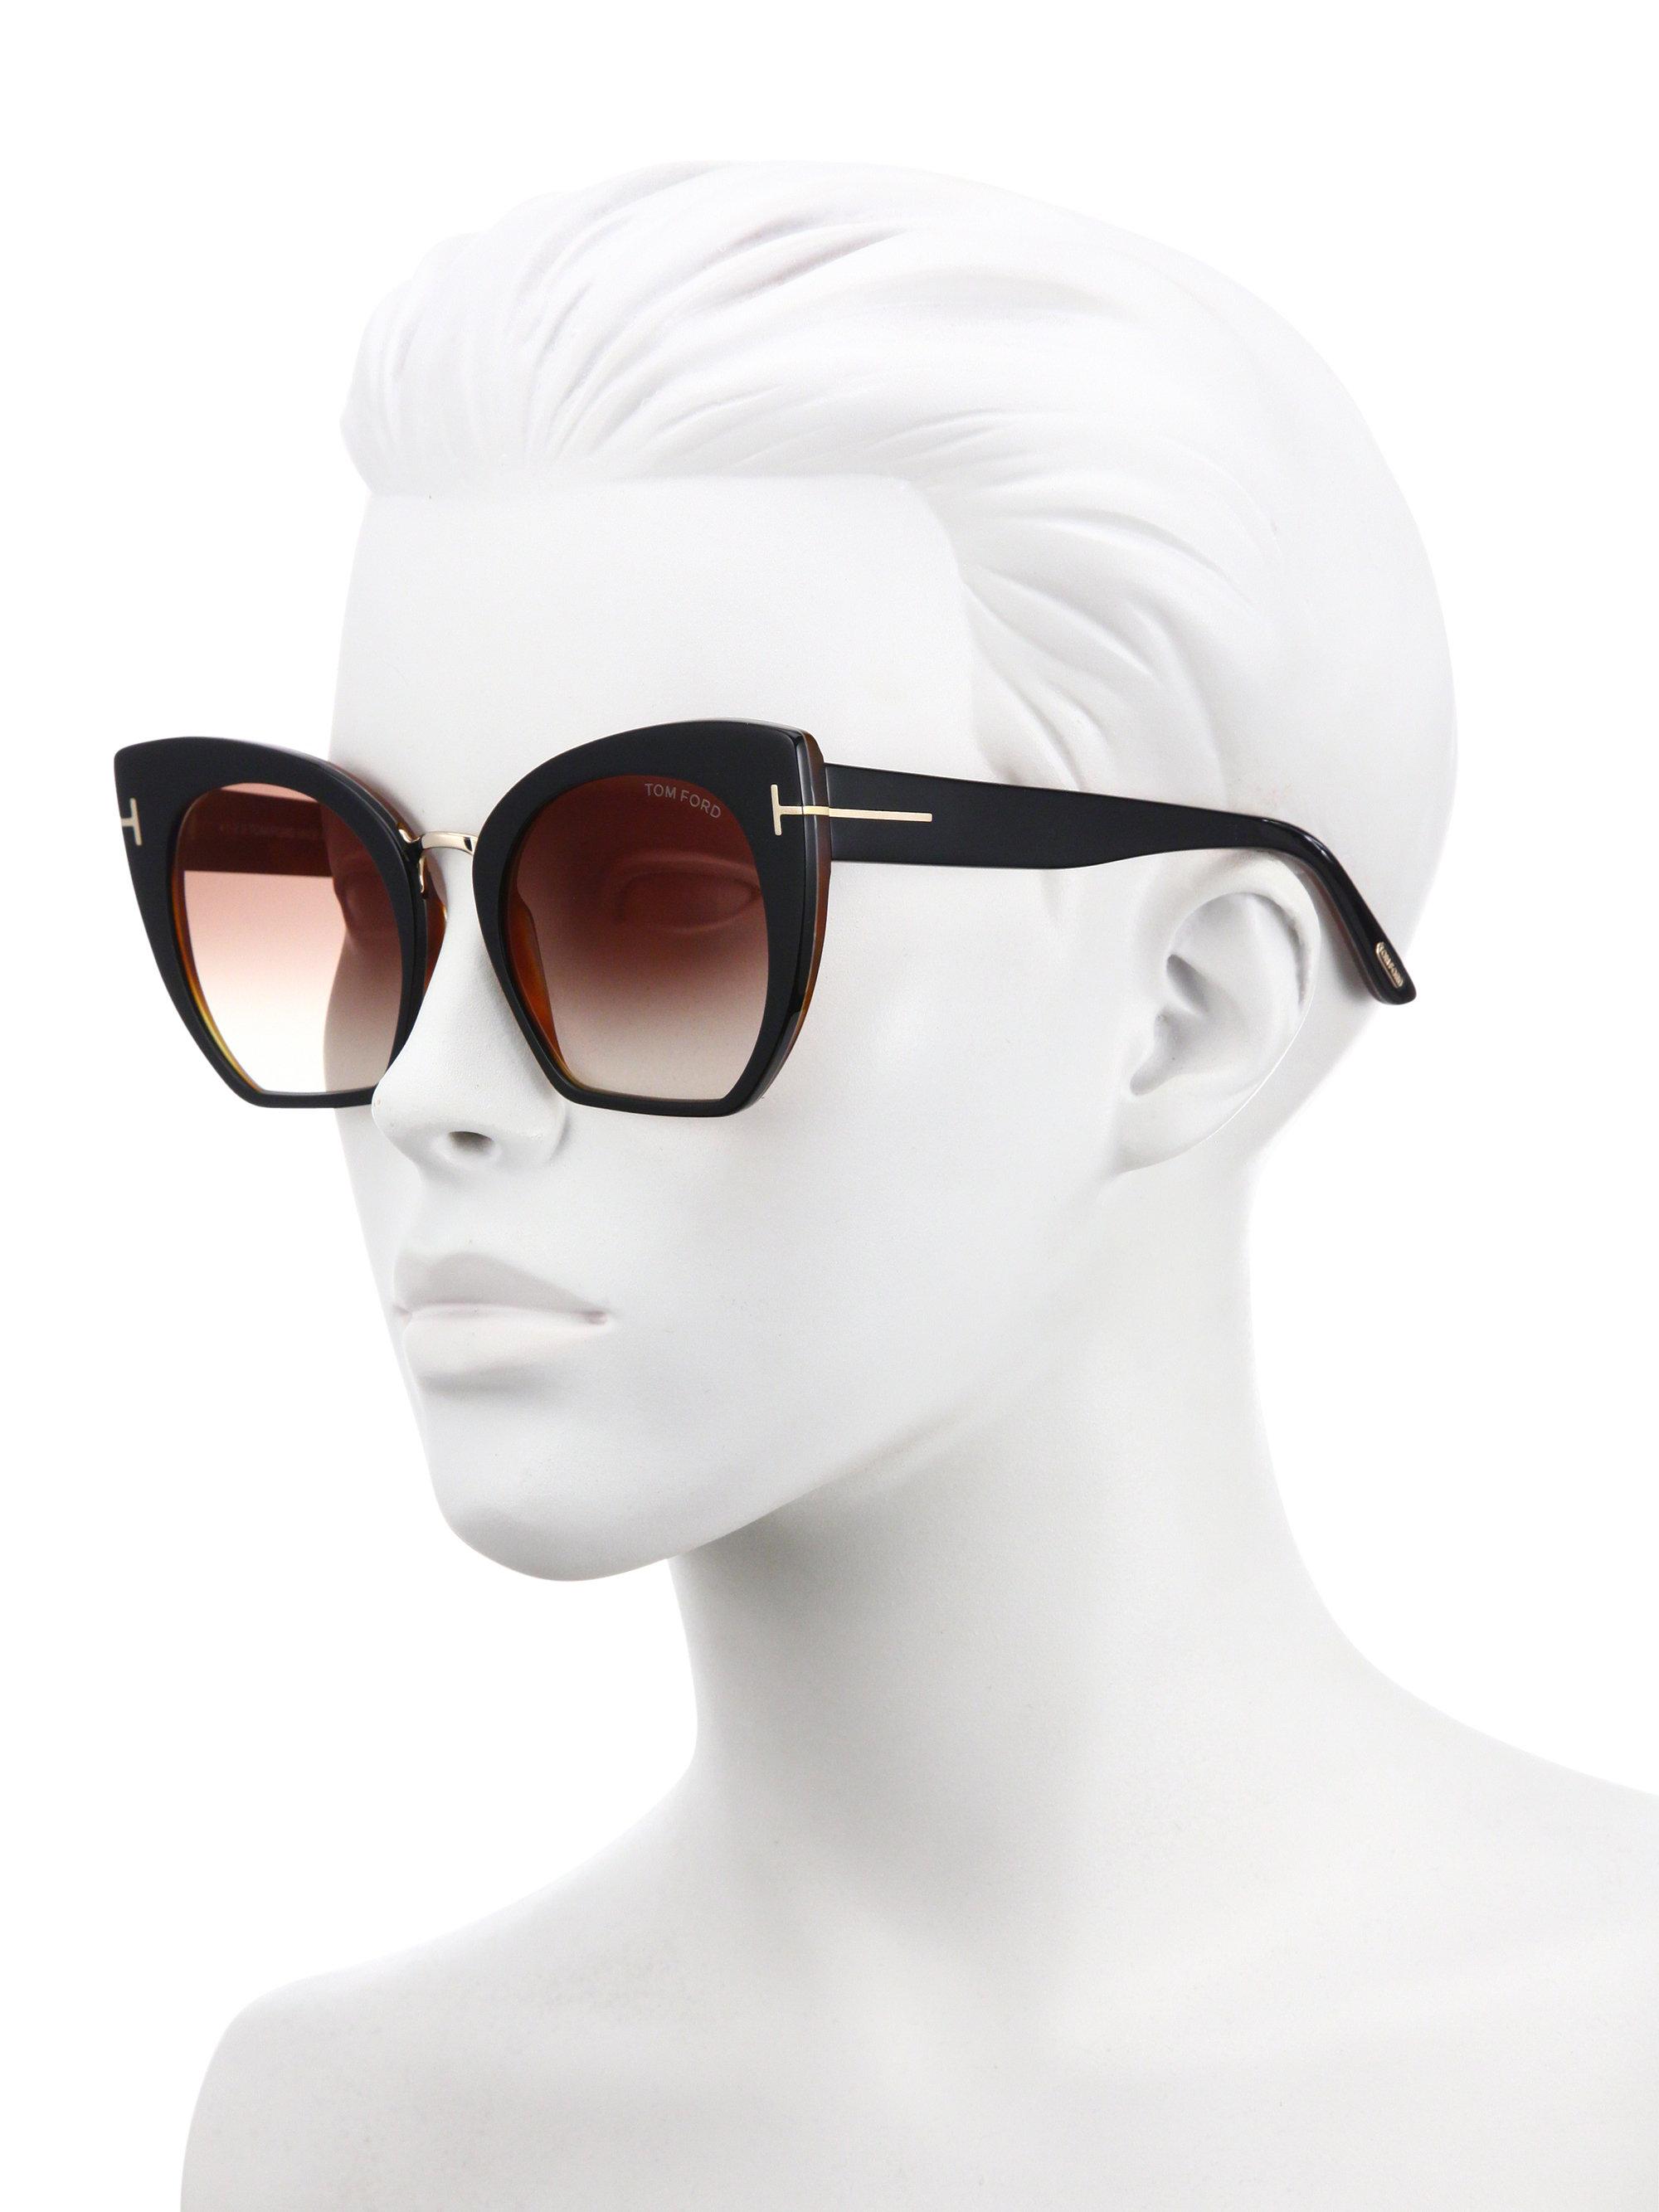 Tom Ford Samantha 55mm Cropped Cat Eye Sunglasses in Black-Bordeaux (Black)  - Lyst